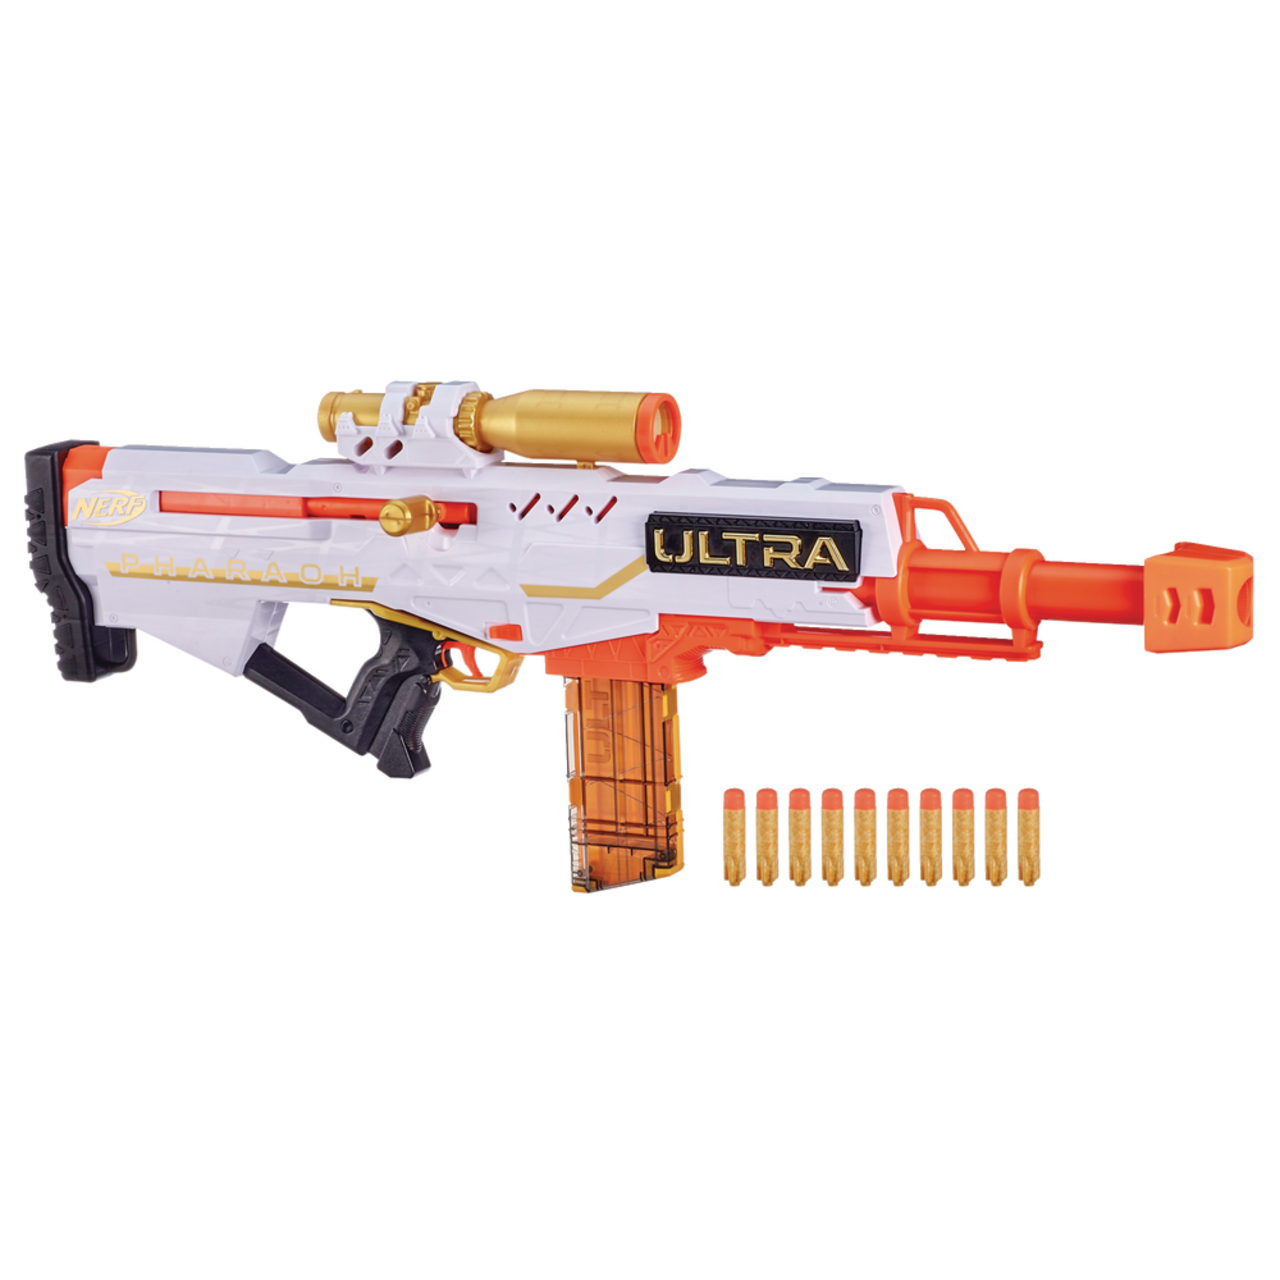 Munitions Nerf Ultra - Pack de 20 fléchettes Nerf Ultra Nerf